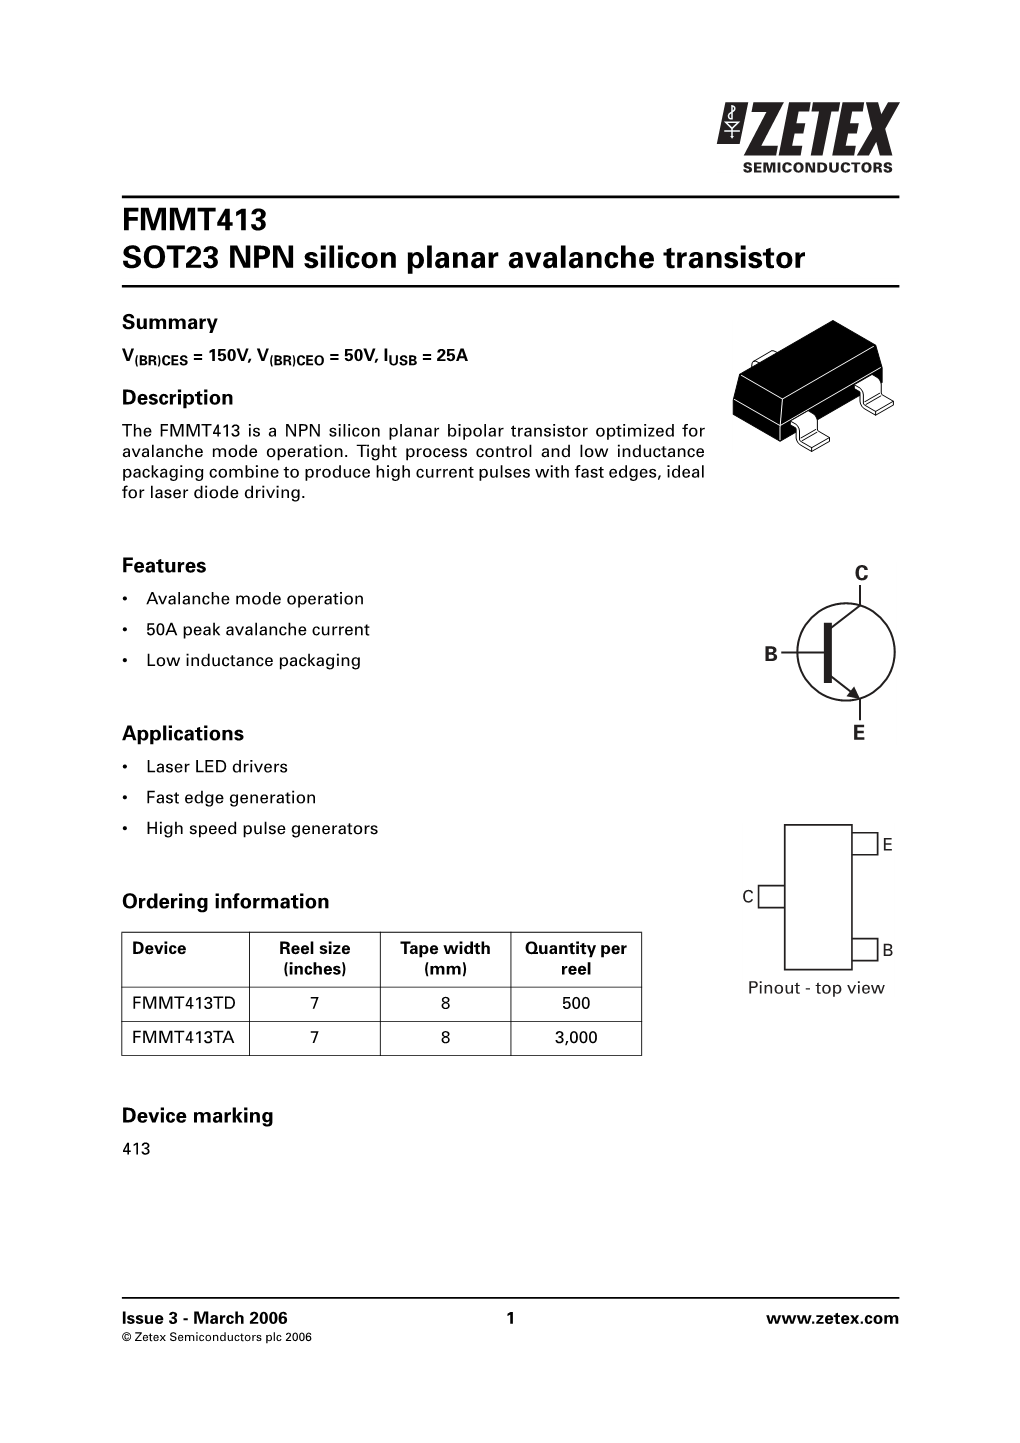 FMMT413 SOT23 NPN Silicon Planar Avalanche Transistor